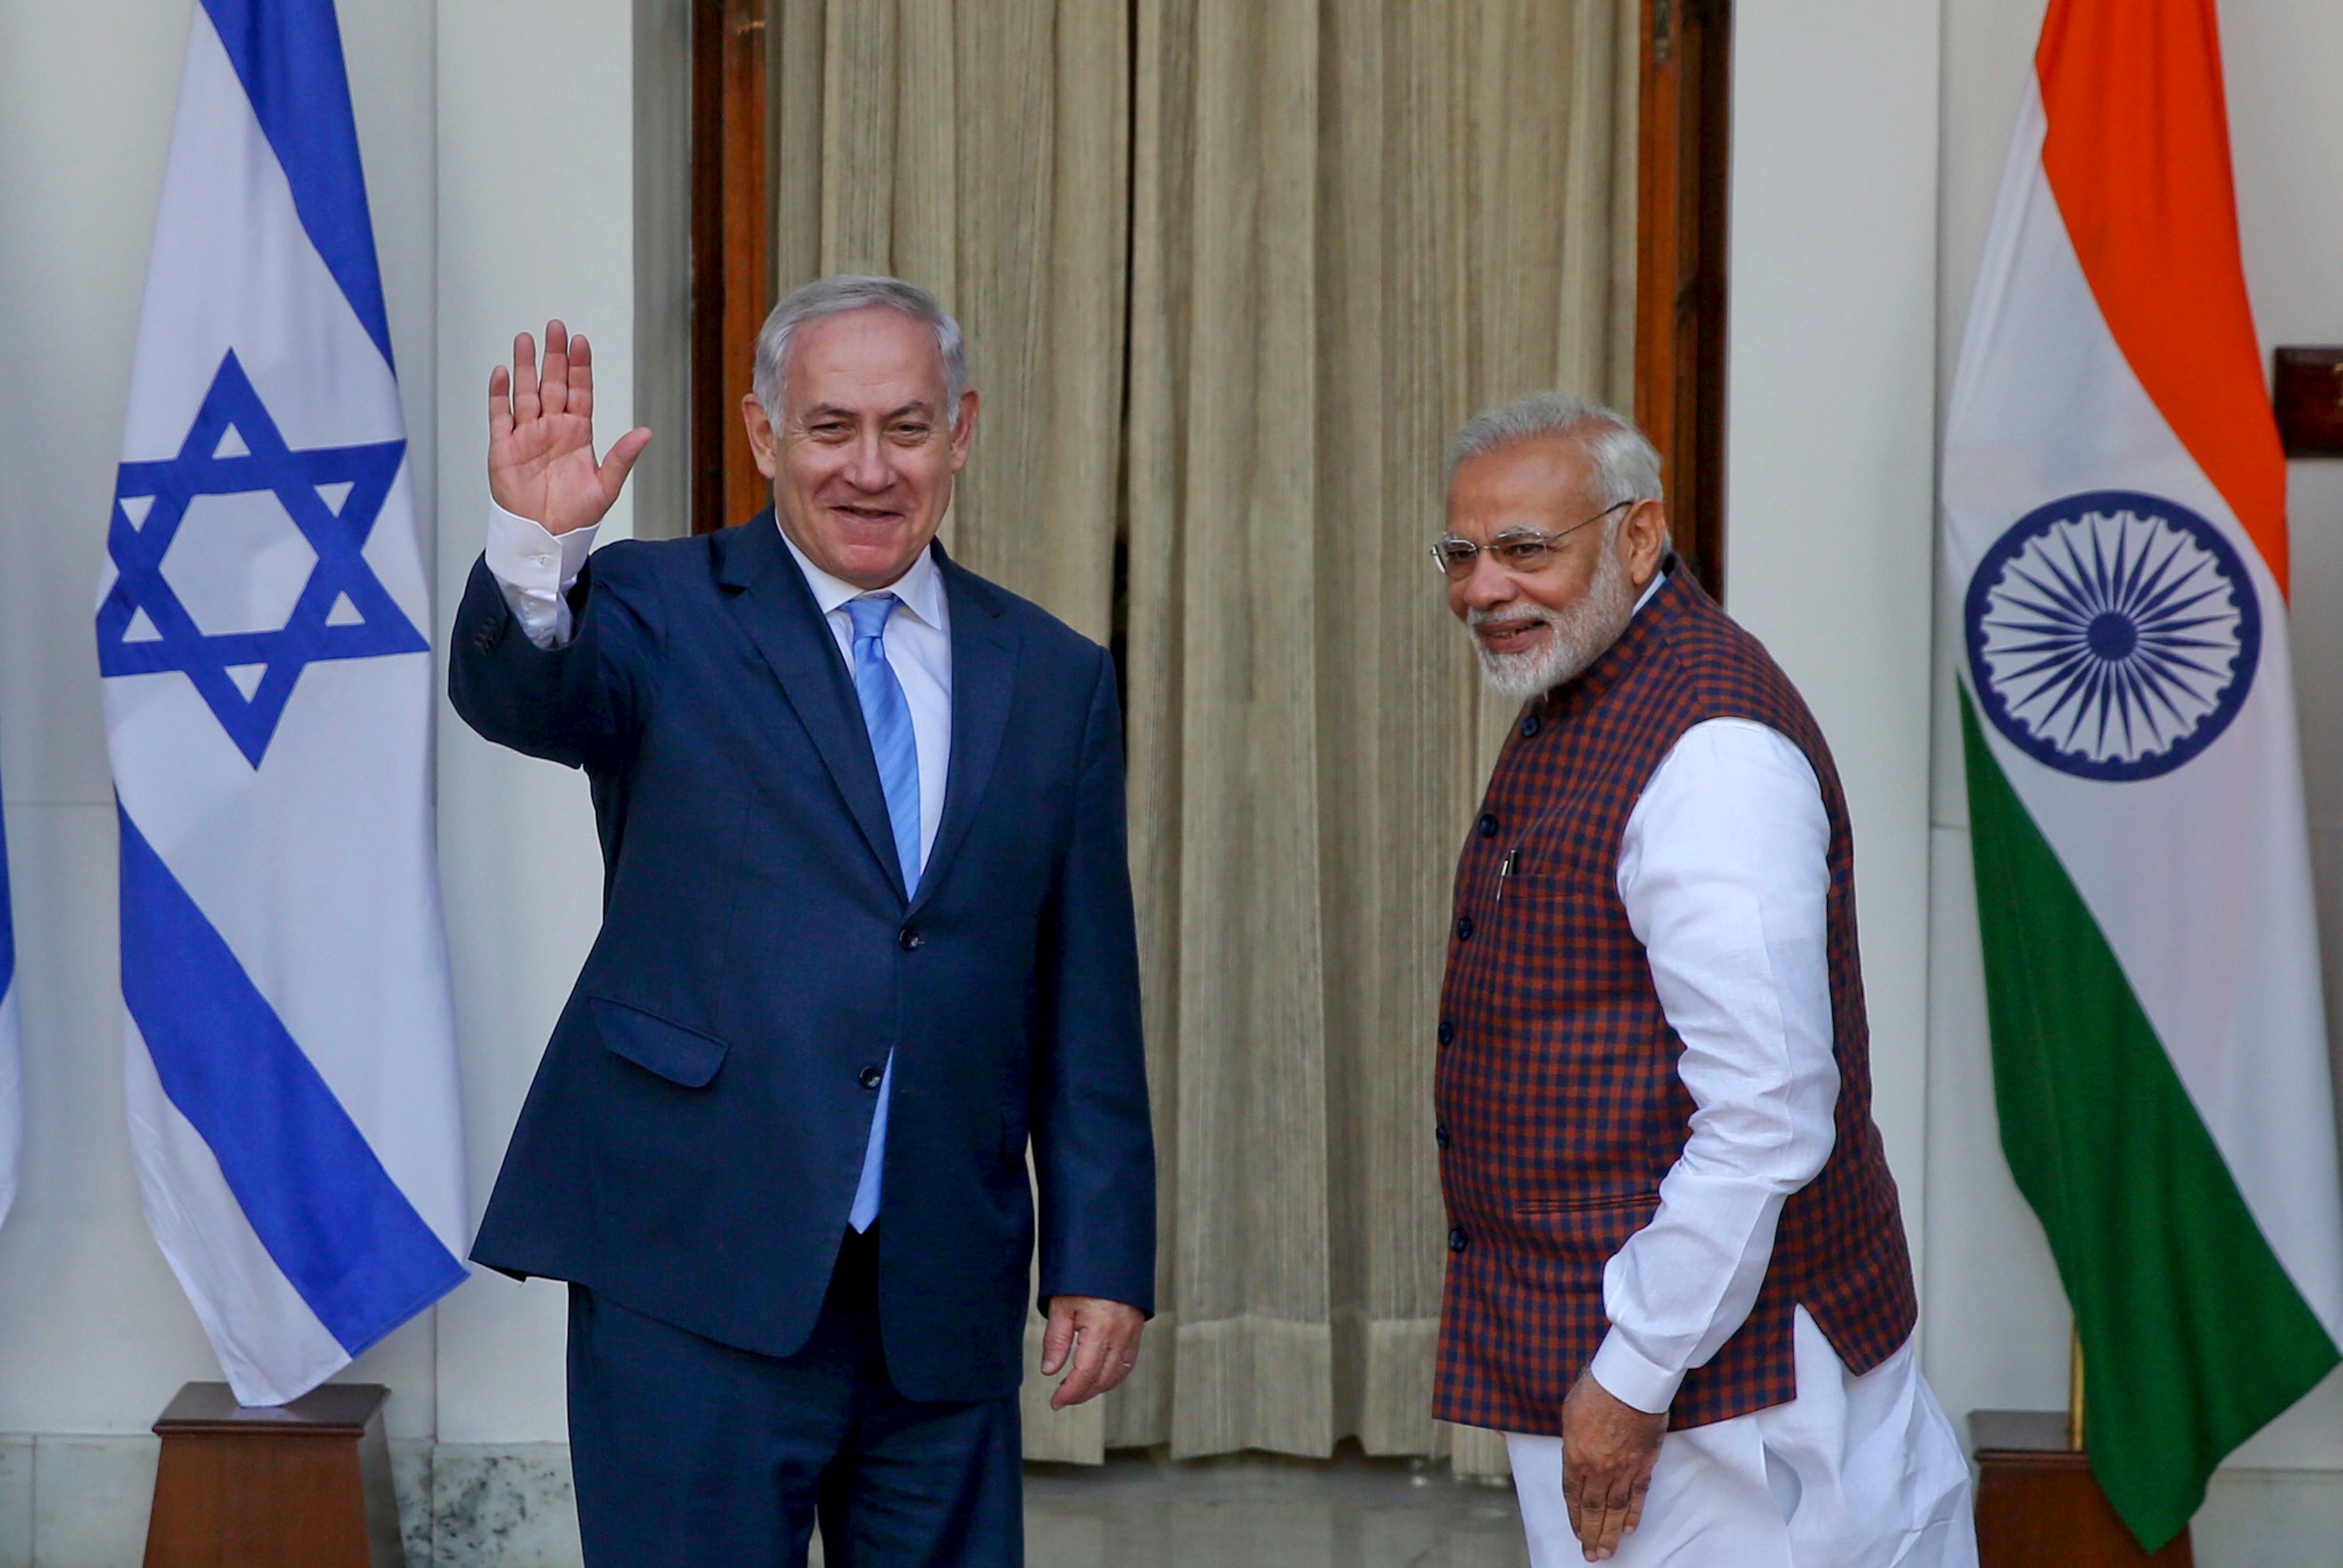 India’s Prime Minister Narendra Modi and Israeli PM Benjamin Netanyahu arrive for a meeting in New Delhi, on January 15, 2018. Photo: AP